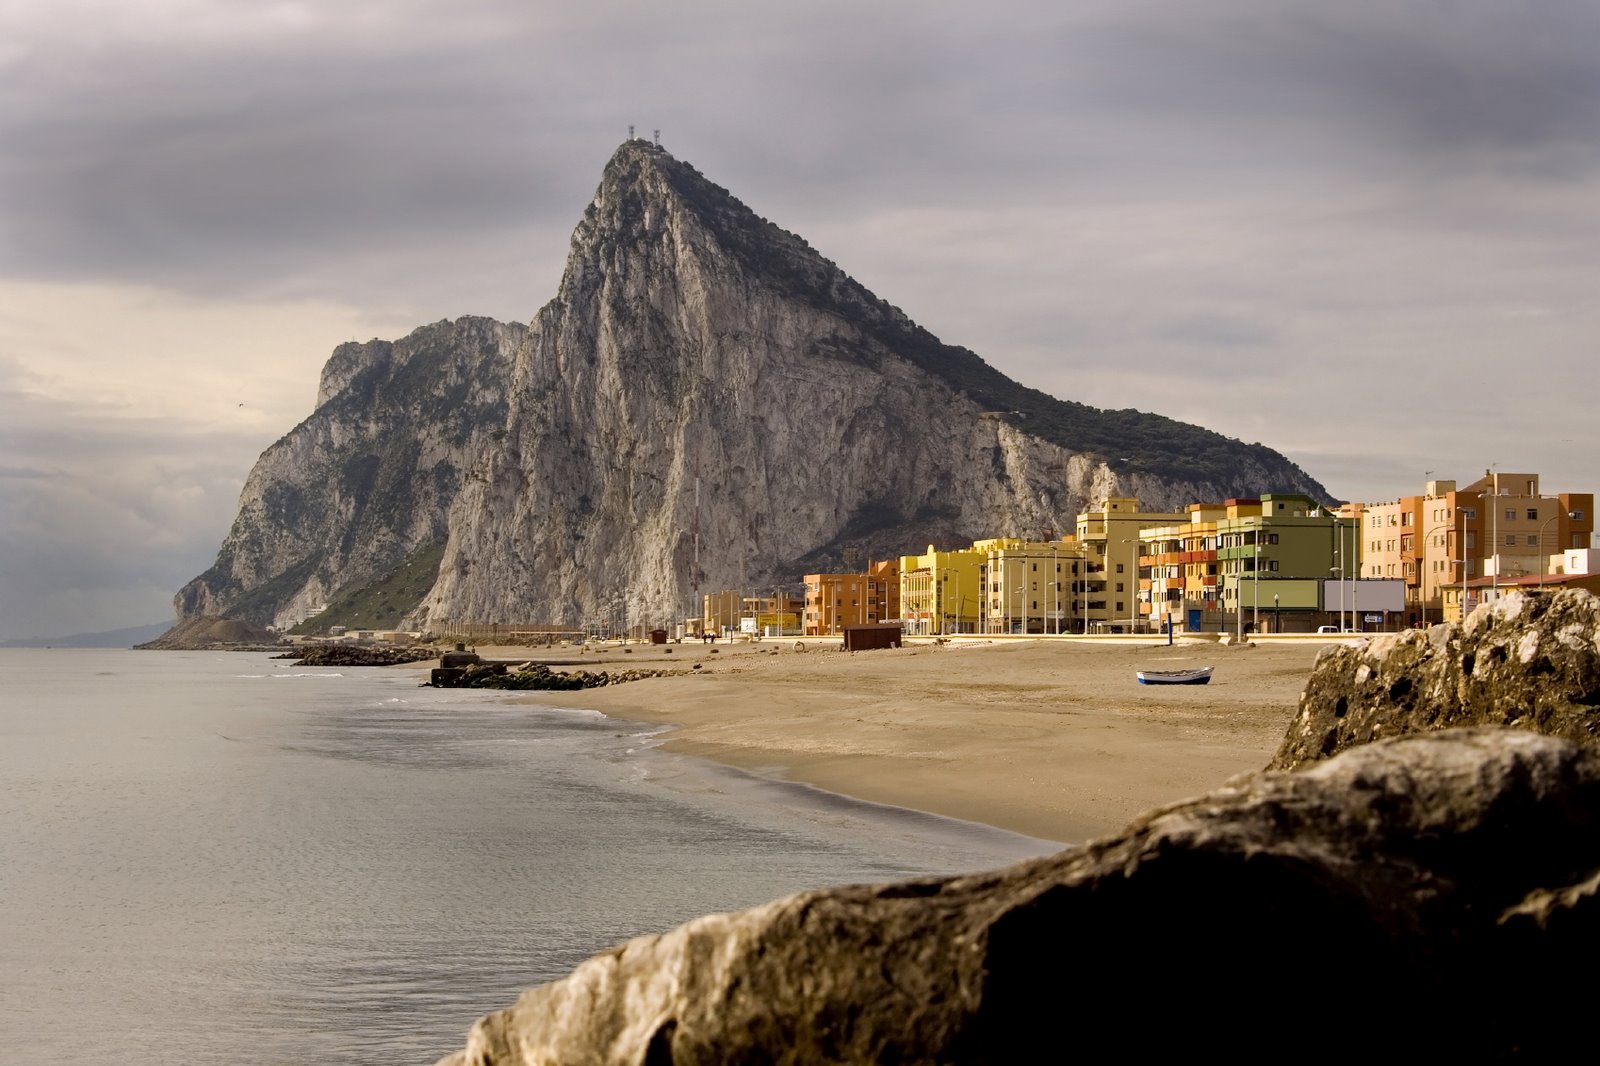 http://www.101viajes.com/sites/default/files/fotos/Gibraltar%202.jpg